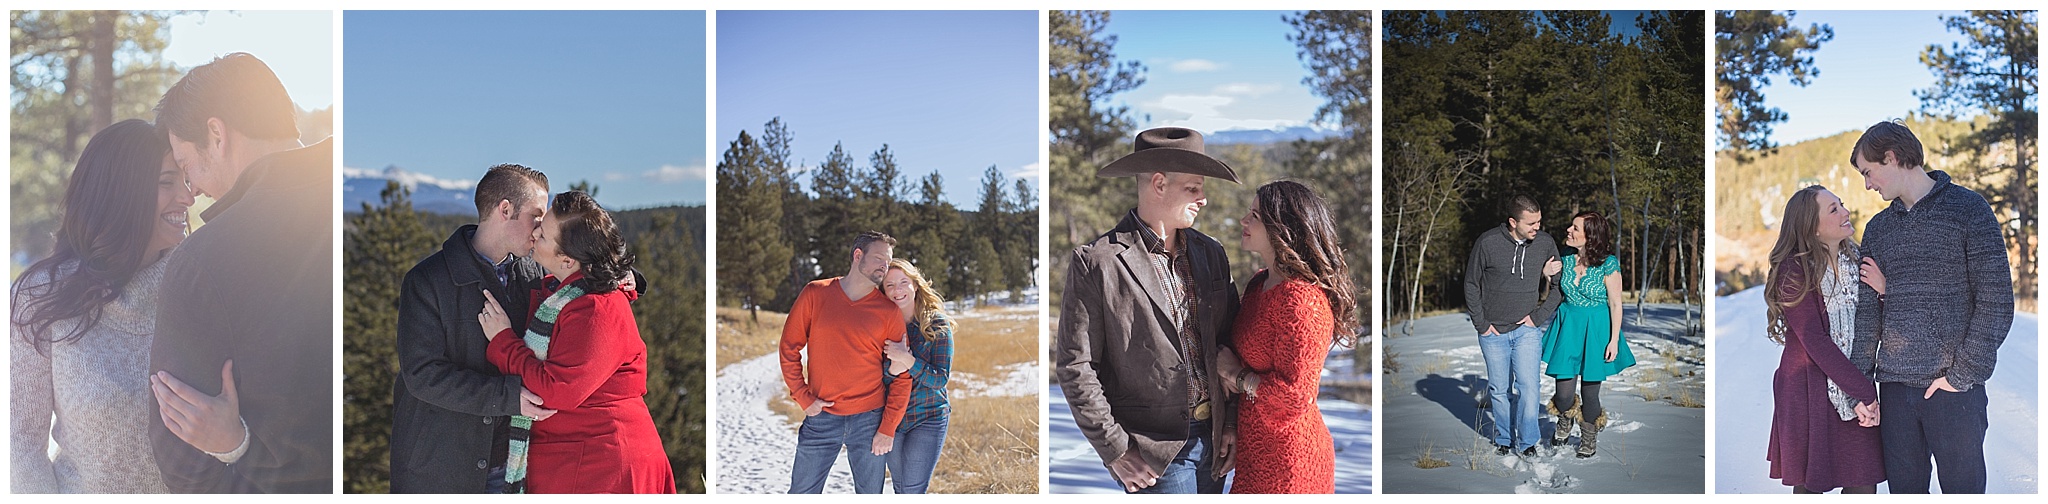 Atomic Workshops, TihsreeD Lodge Wedding Venue, Florissant, Colorado Engagement Photographer